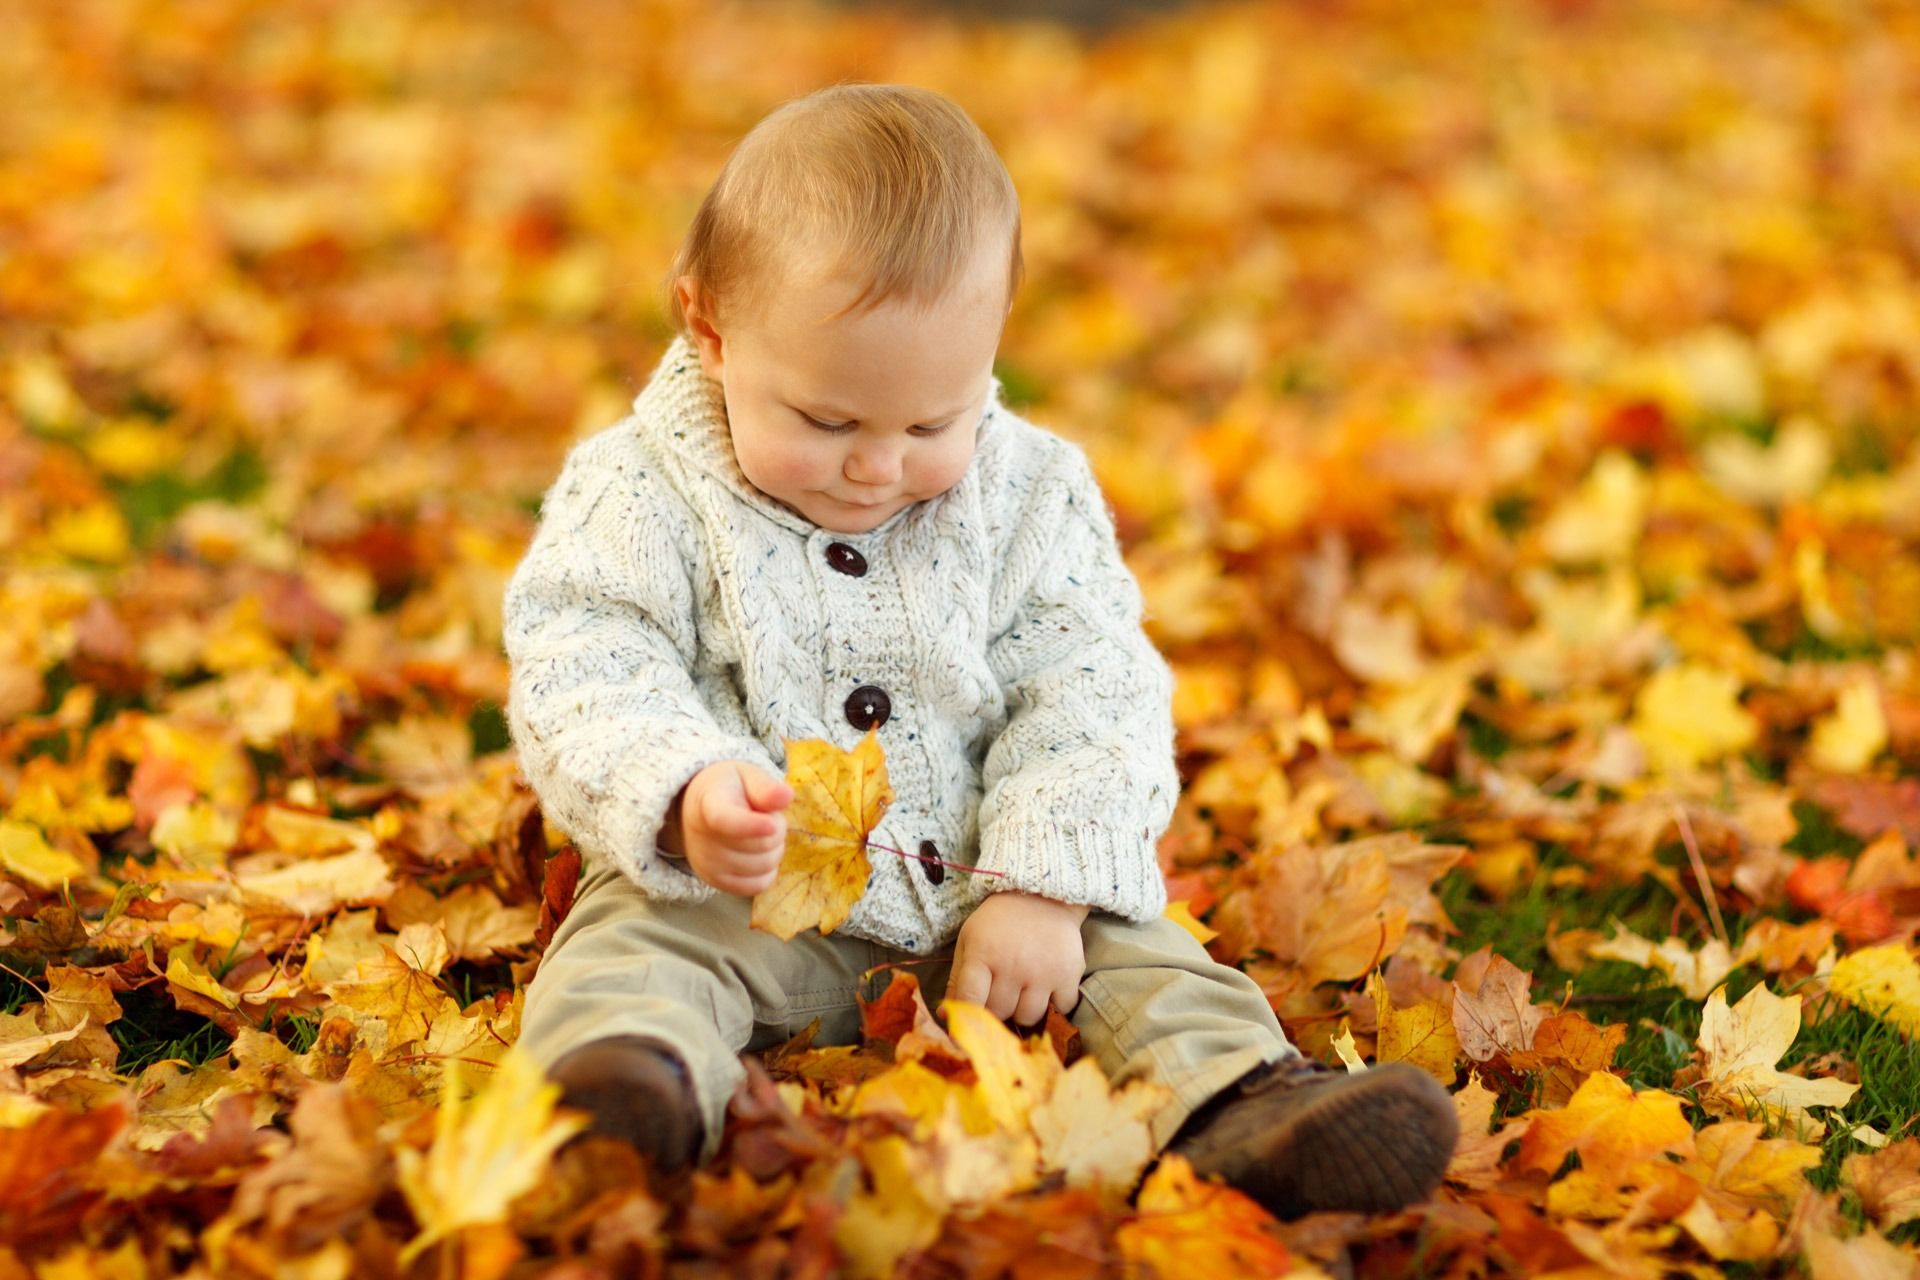 Display Autumn Fall Baby Boy Child · Free